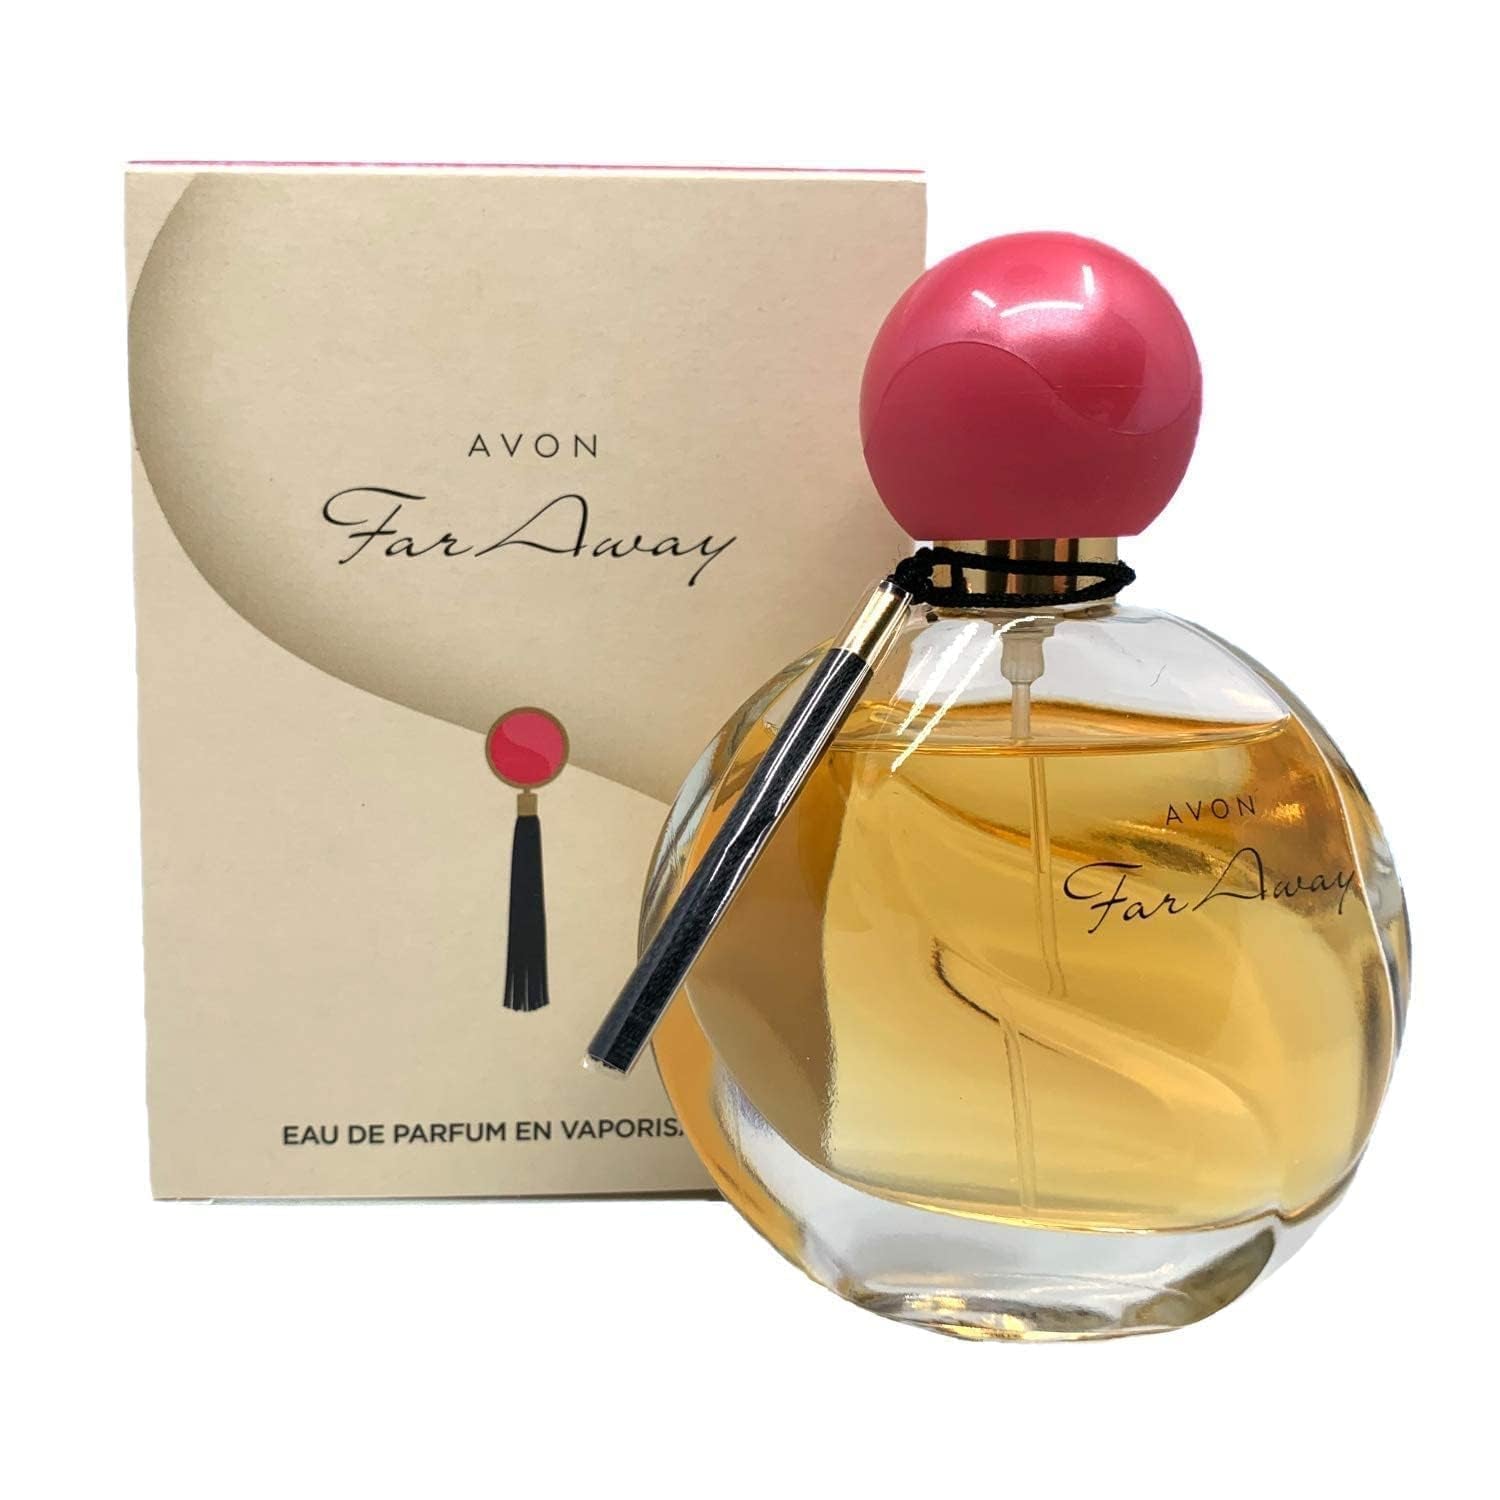 Far Away Eau de Parfum Spray for Women, 1.7 Fluid Ounce